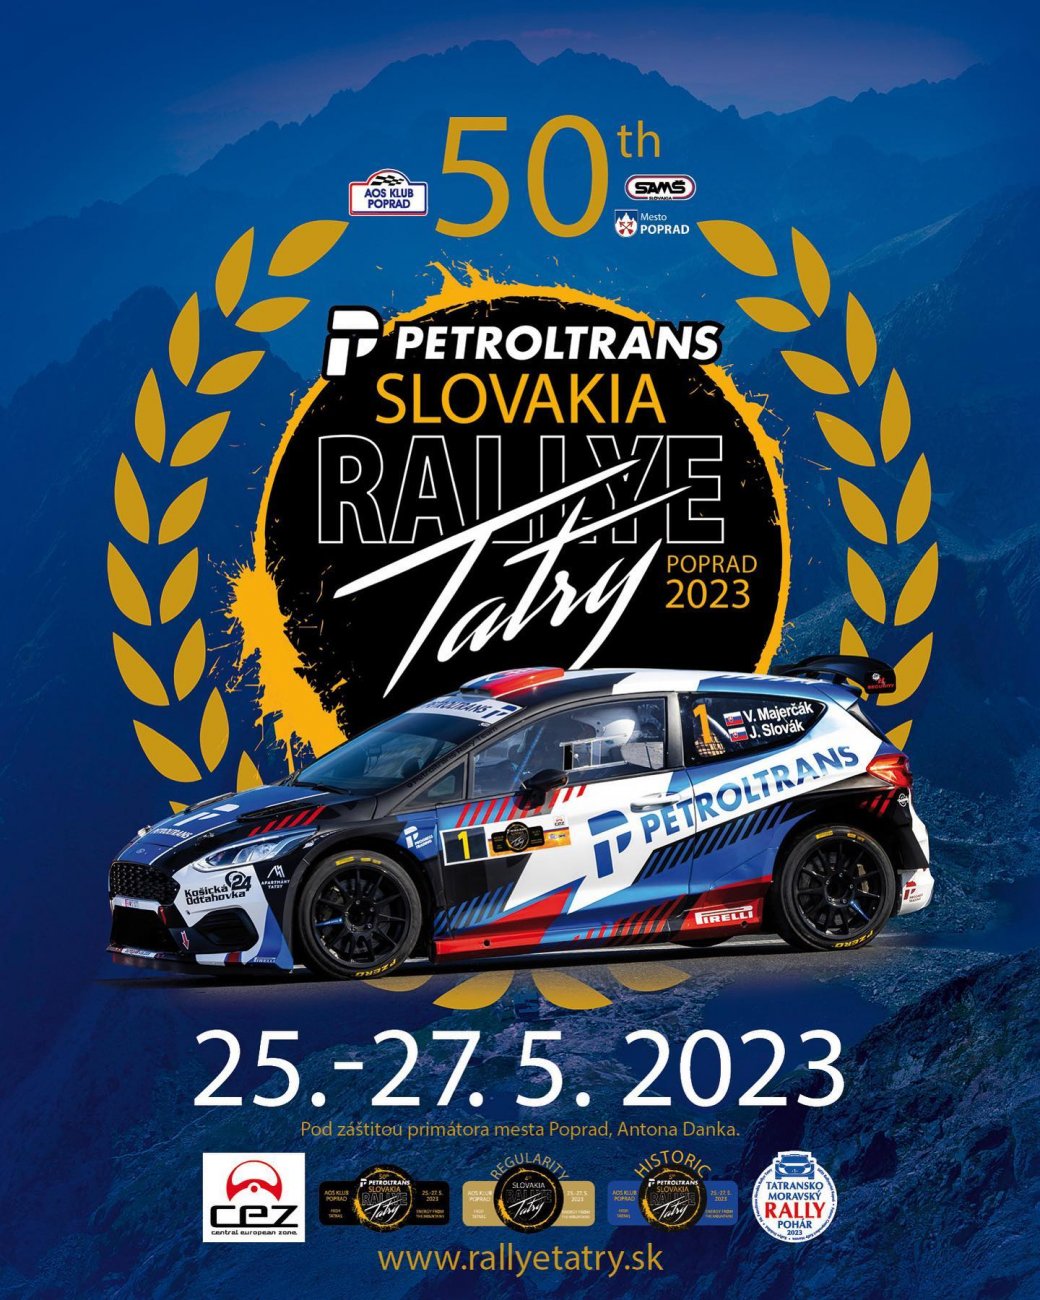 Slovakia Rallye Tatry 2023